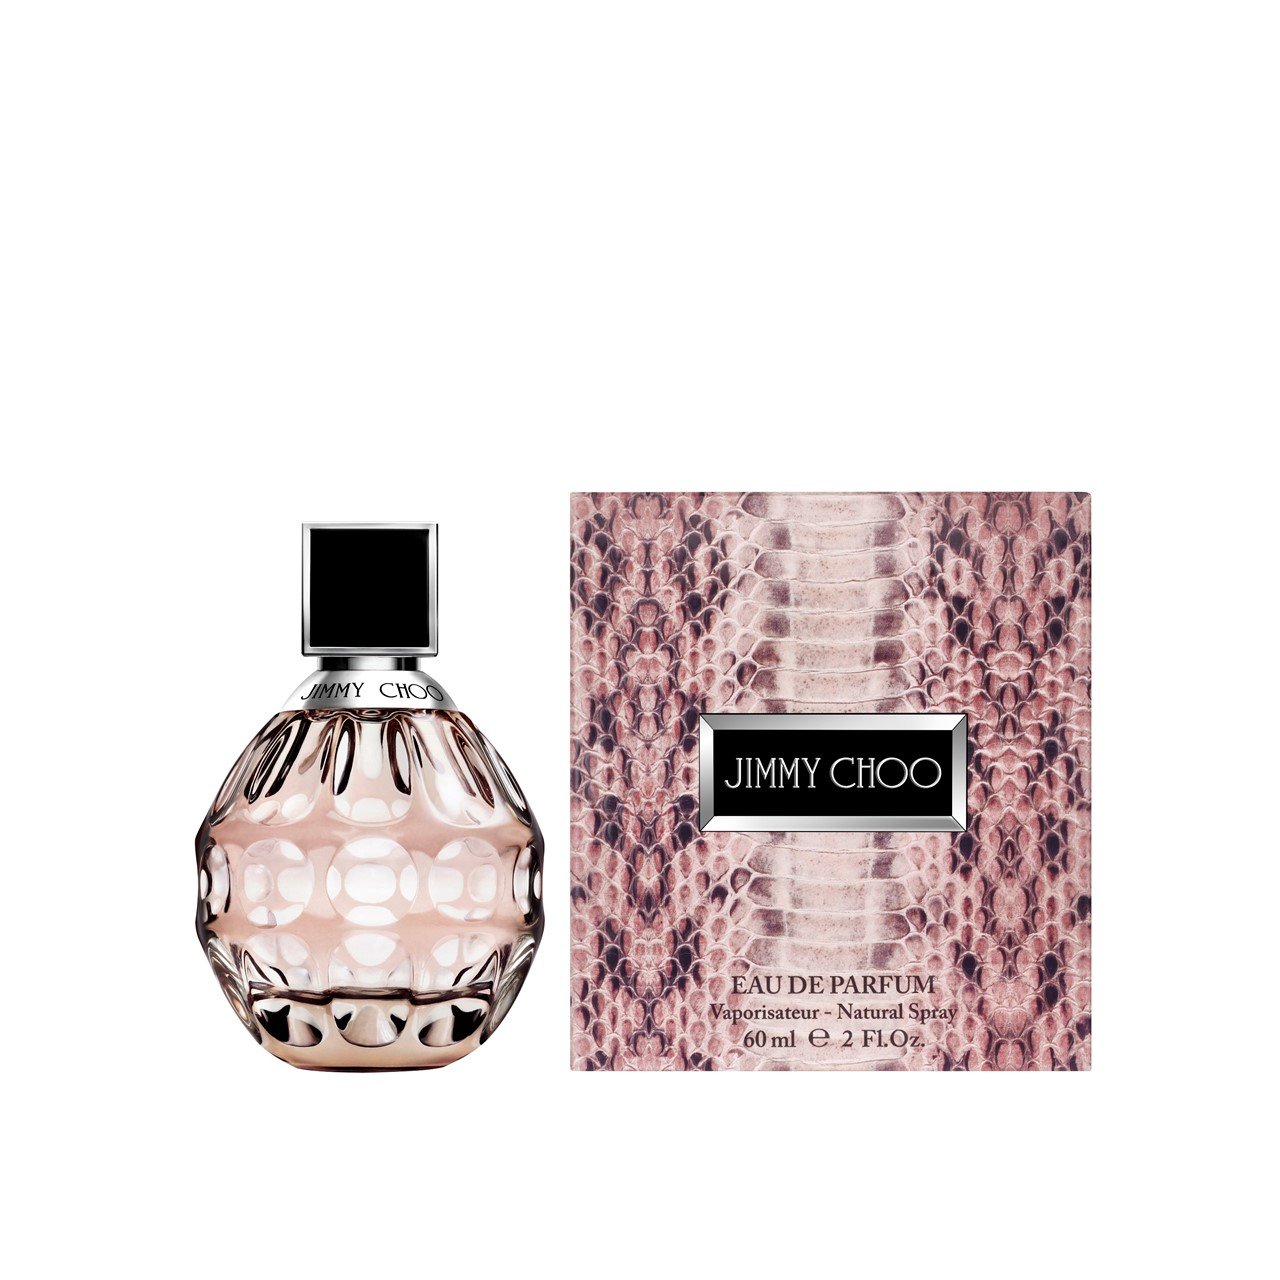 Jimmy Choo Eau de Parfum For Women 60ml (2.0fl oz)